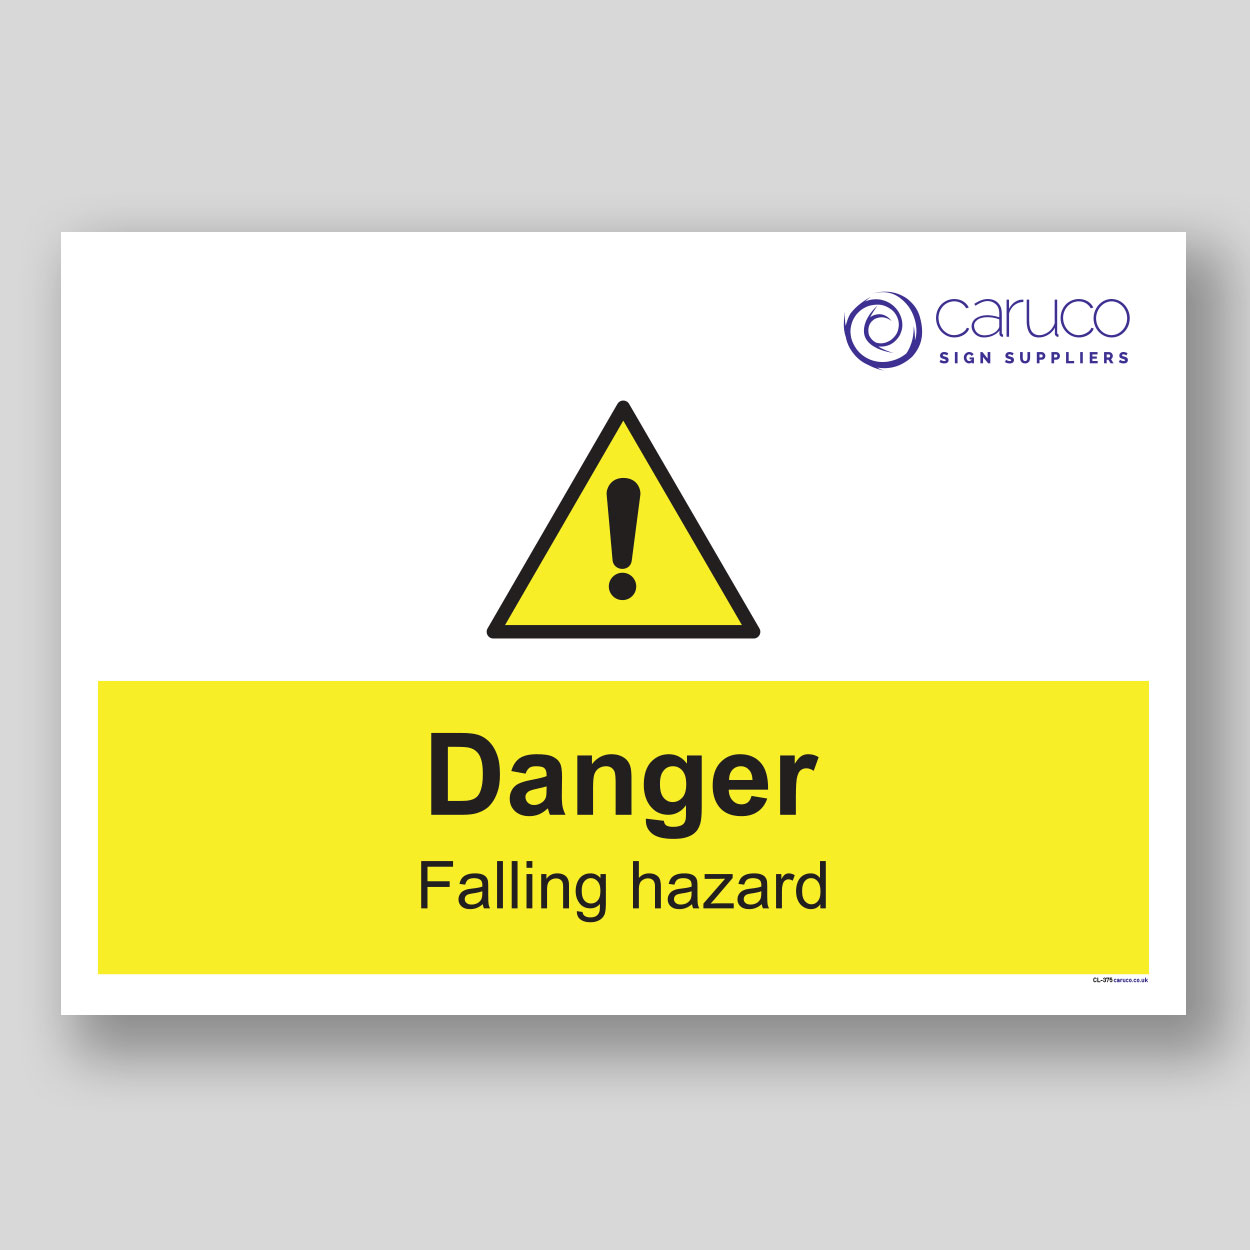 CL-375 Danger - falling hazard